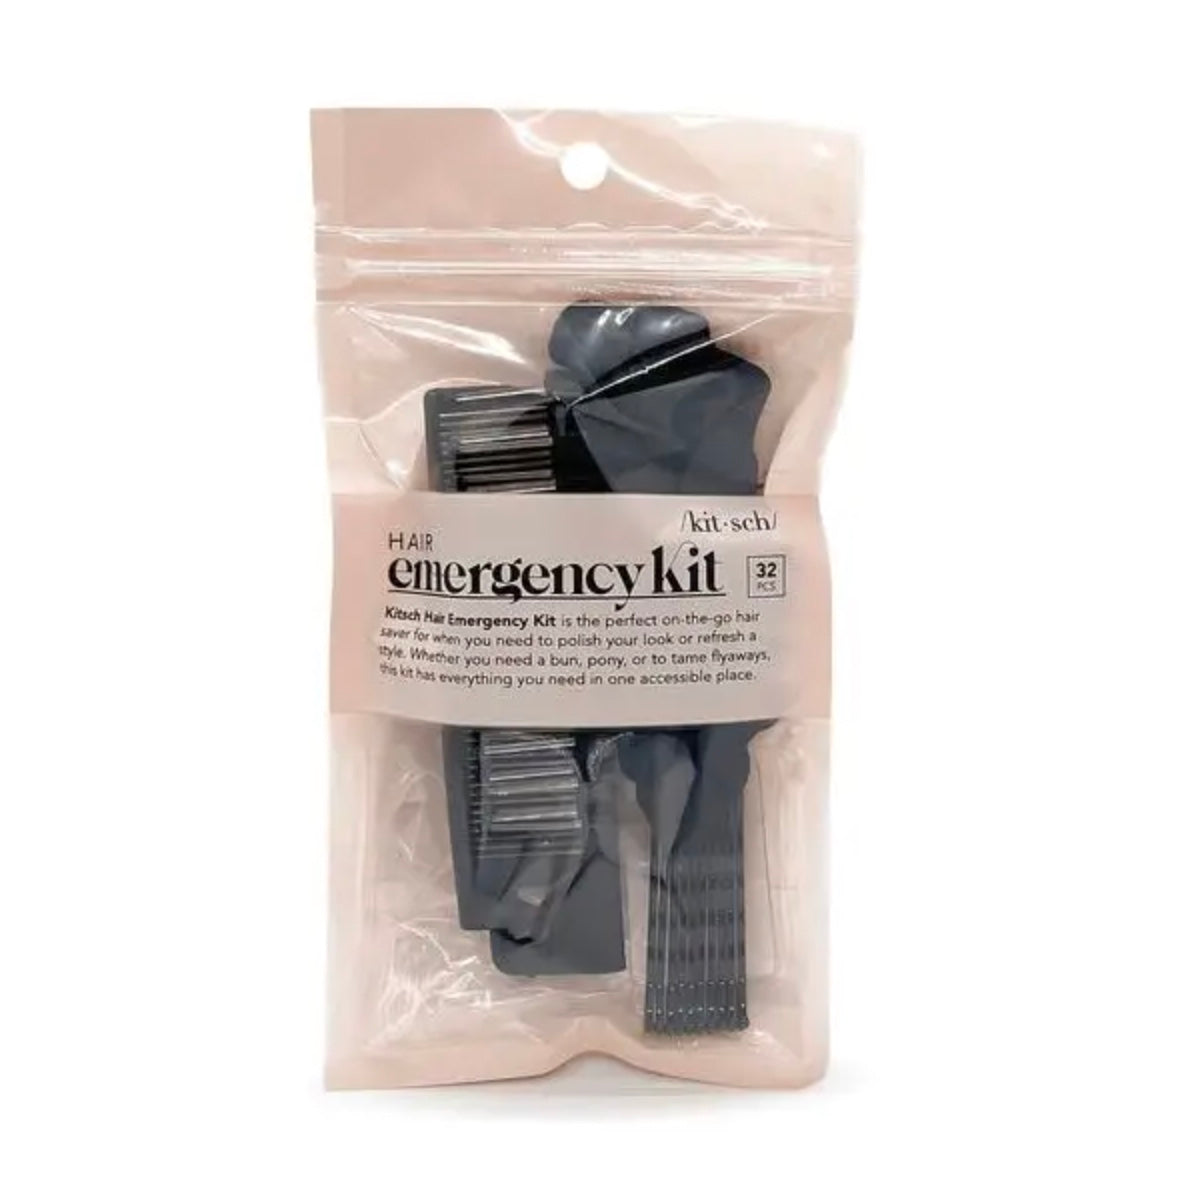 Hair Emergency Kit by Kitsch